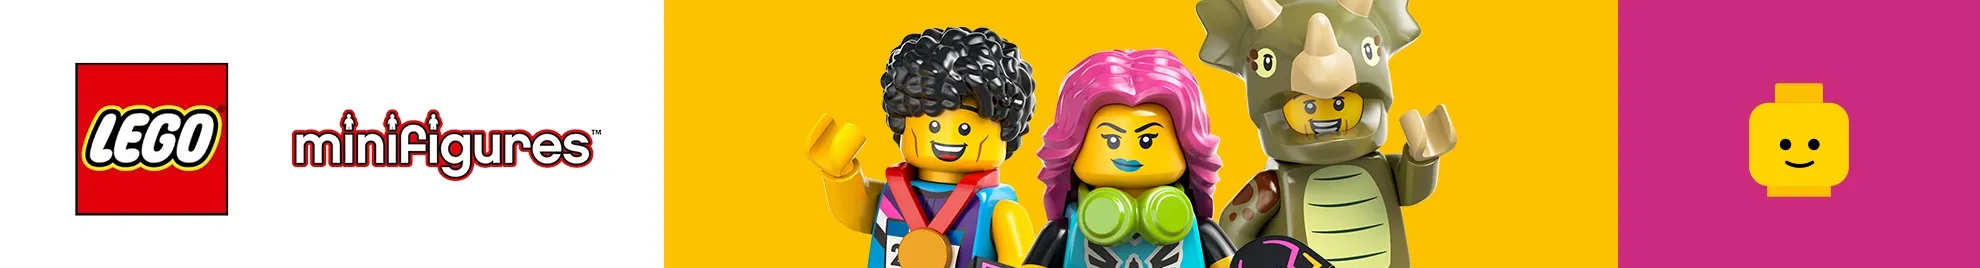 LEGO Minifigures banner